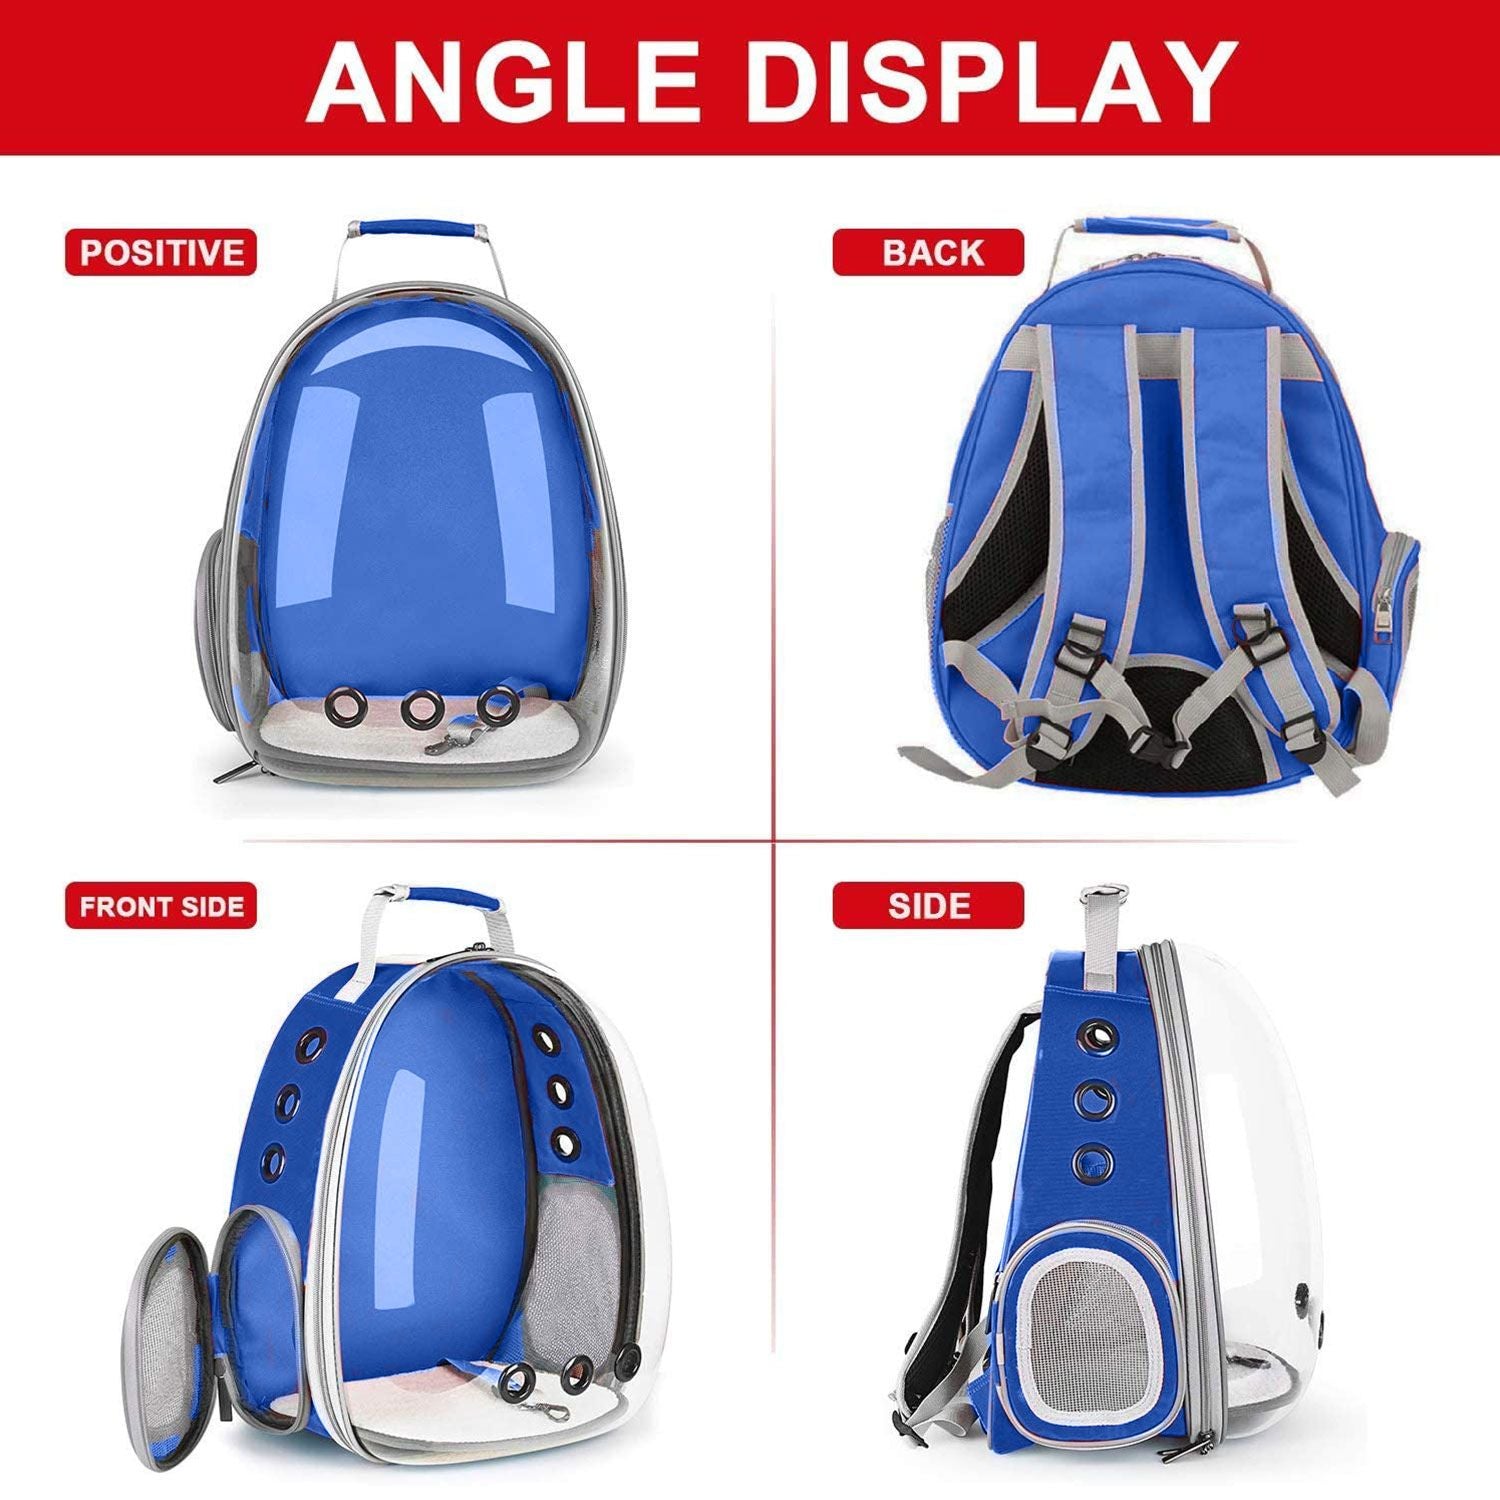 Floofi Space Capsule Backpack - Model 1 (Blue)